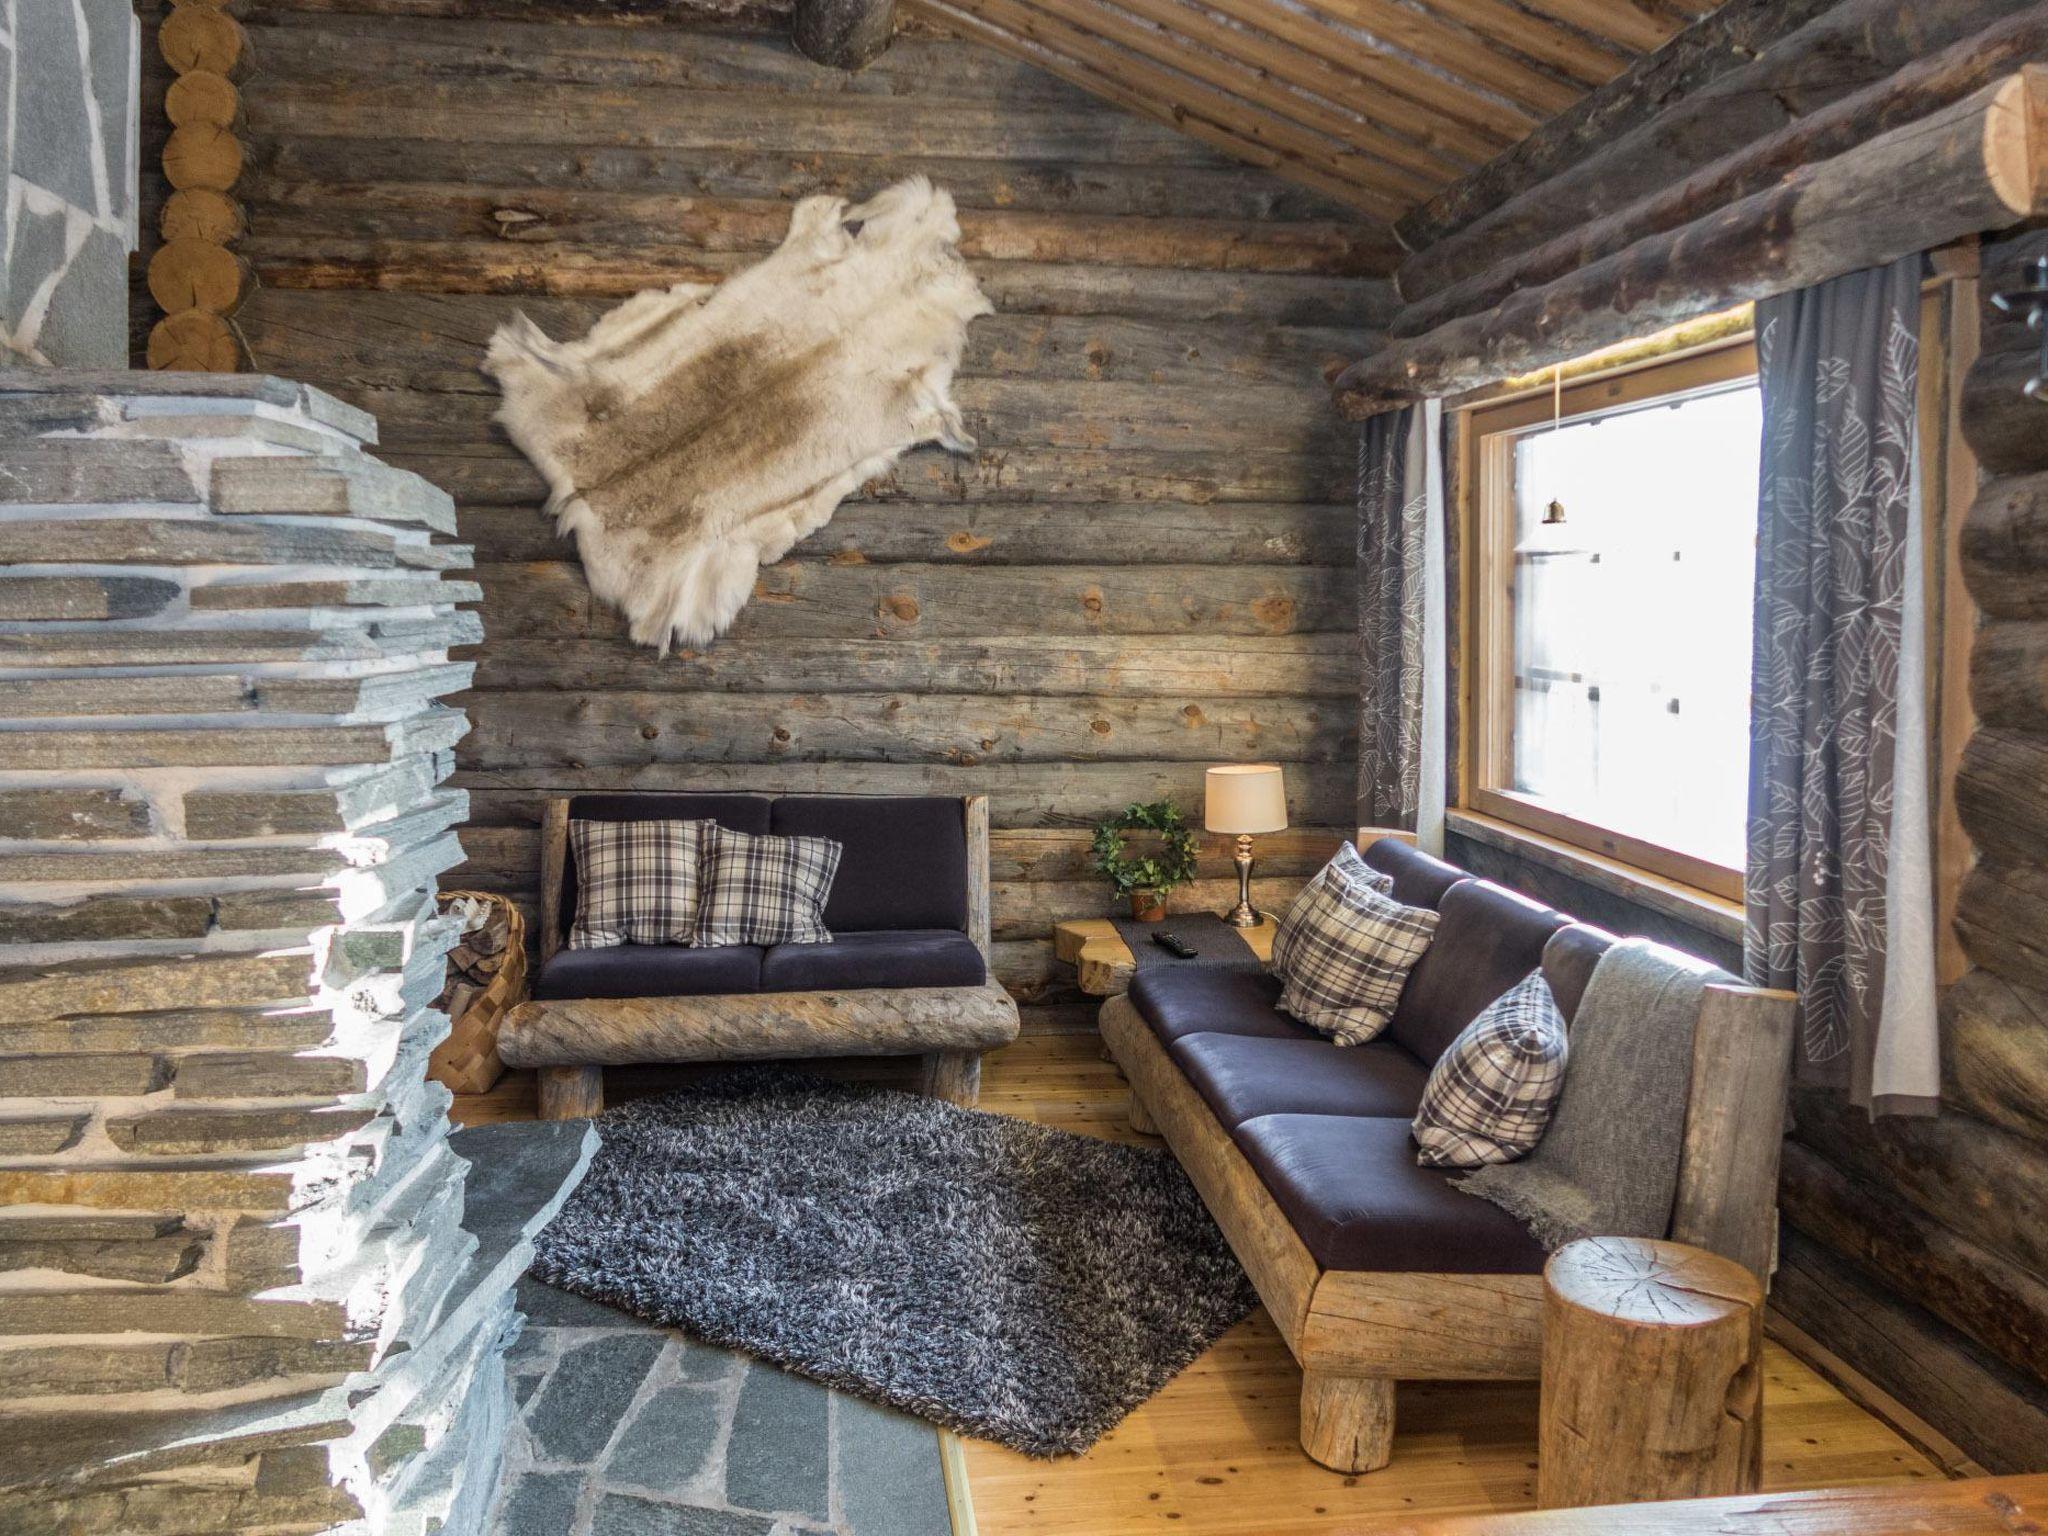 Photo 2 - 1 bedroom House in Kuusamo with sauna and mountain view